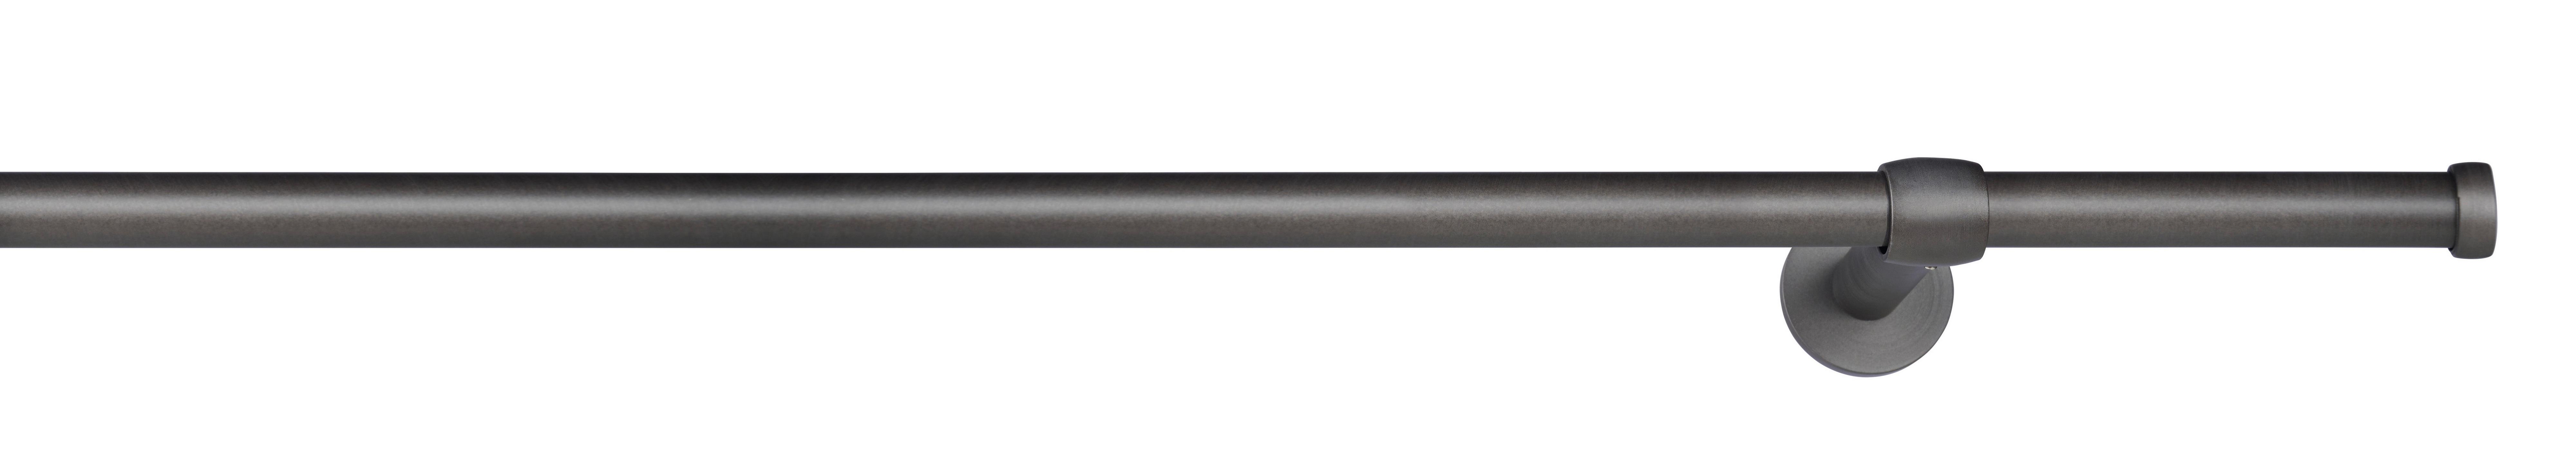 Garnýž S Příslušenstvím Brush, 160-280cm - Moderní, kov (160-280cm) - Premium Living